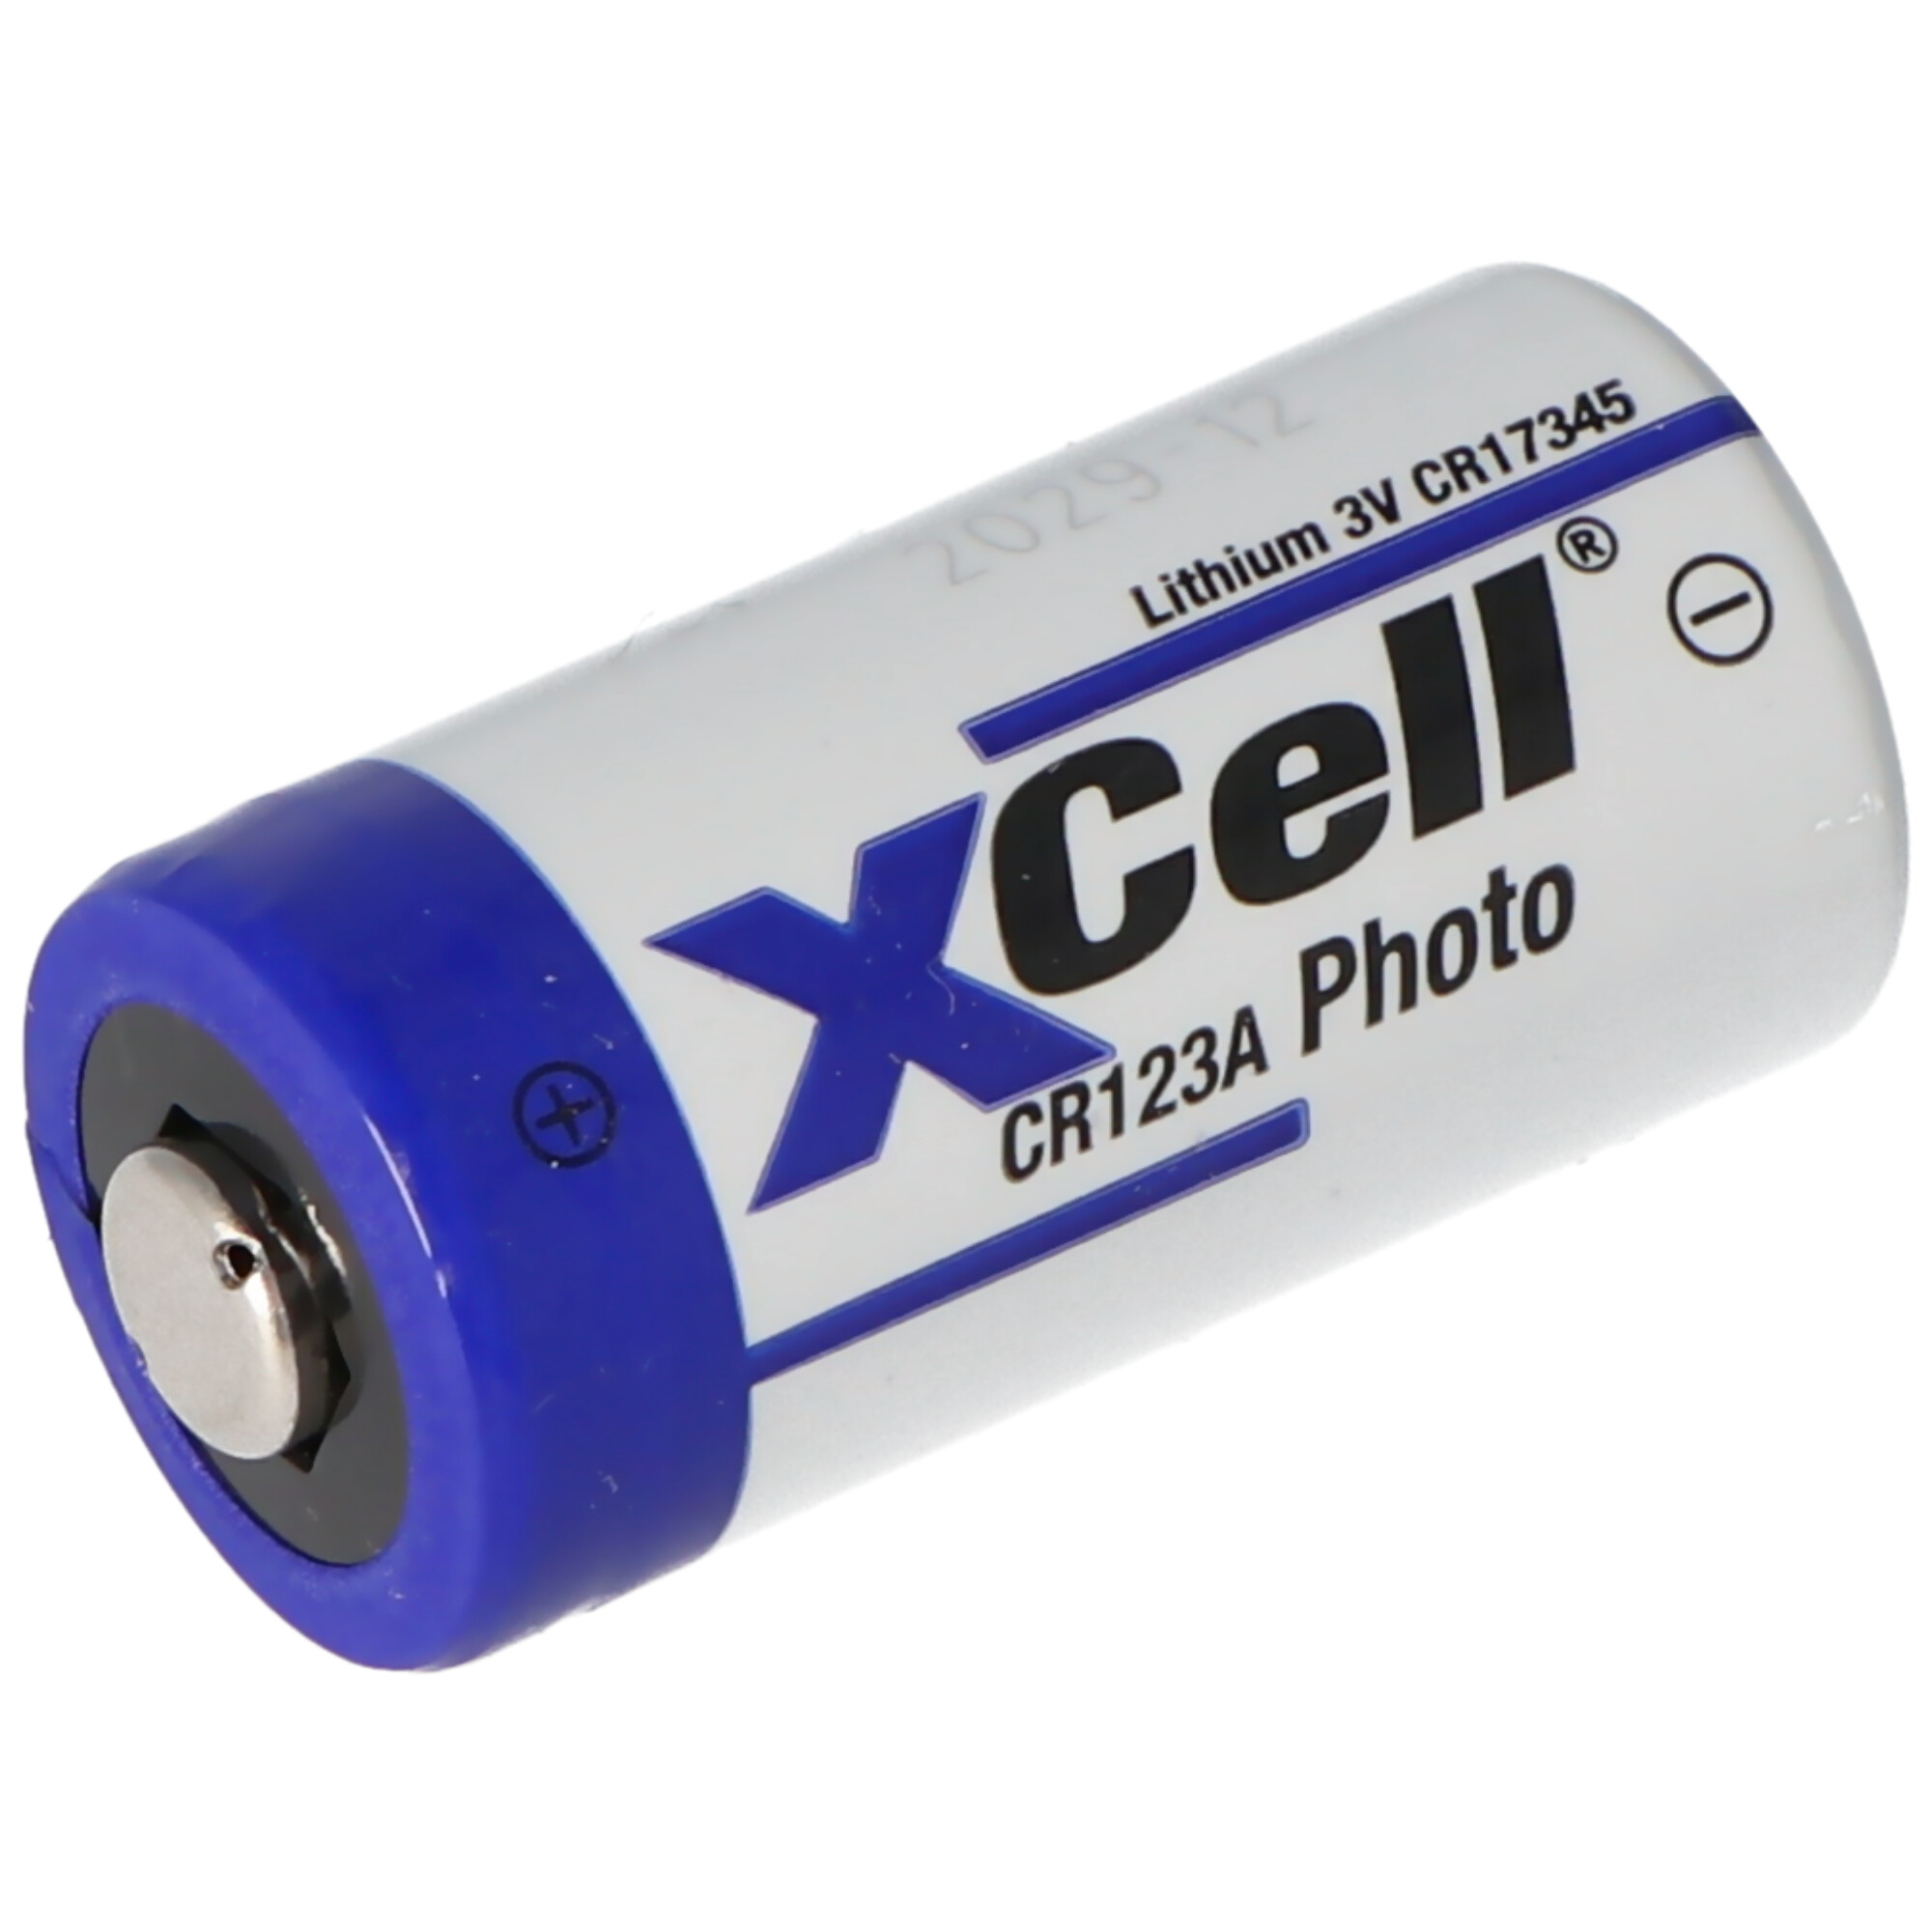 100 Stück Photobatterie CR123A Lithium Batterie 3 Volt max. 1550mAh, 34,5x17mm 19Gramm Lose Ware bulk